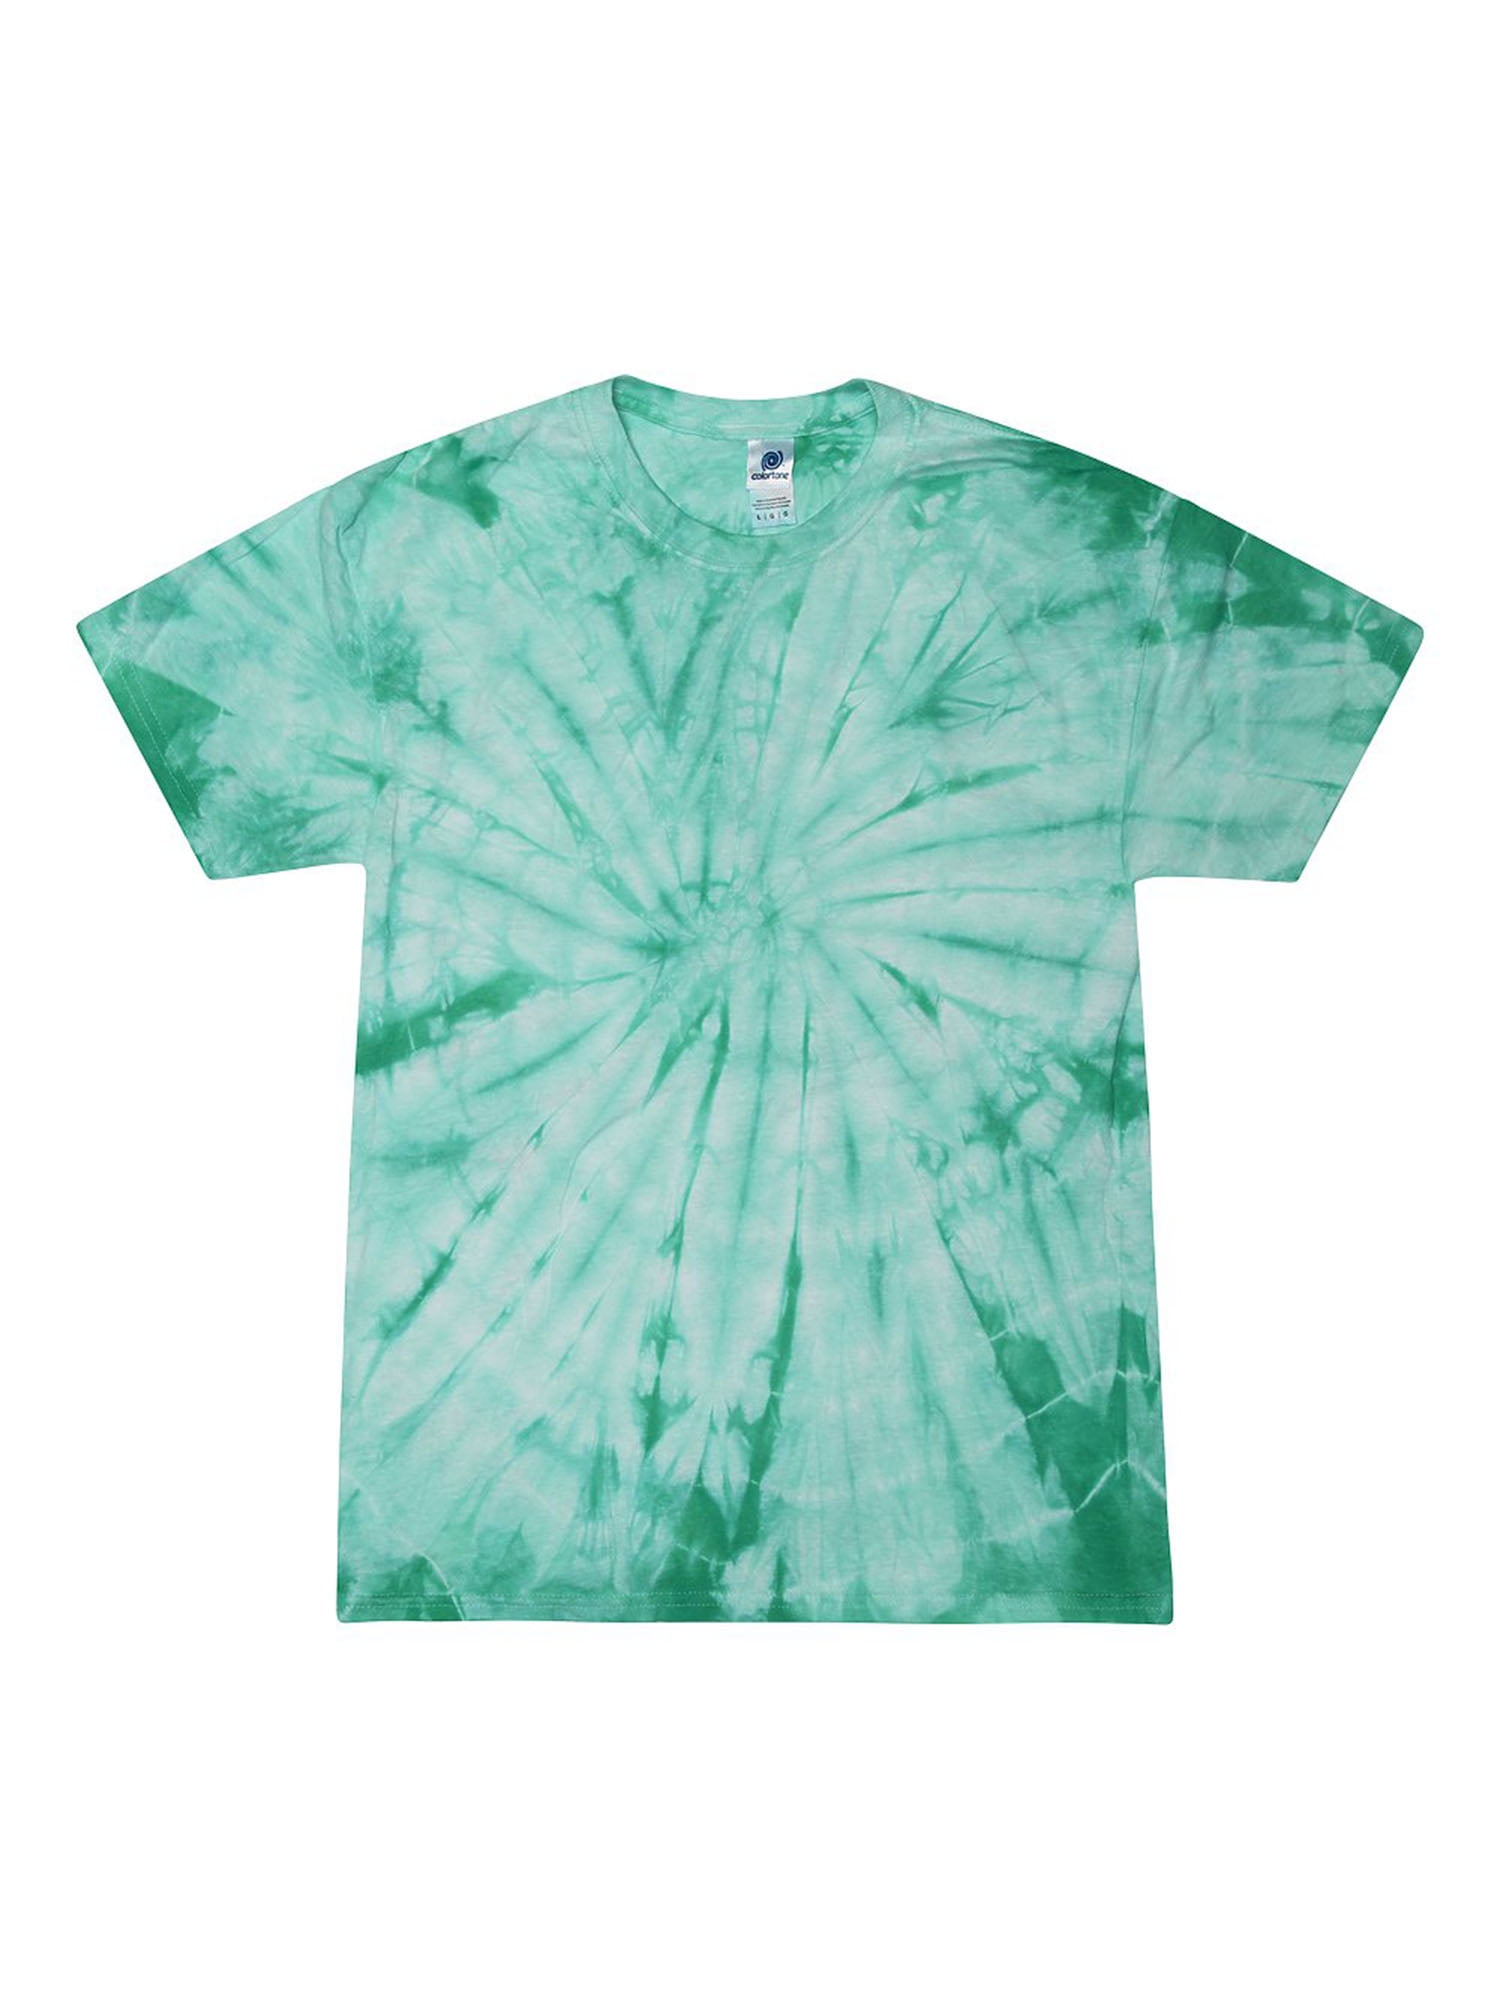 Camo/Earth Tone Shirt-V-Neck or Crew Neck — Soul Shine Tie Dyes